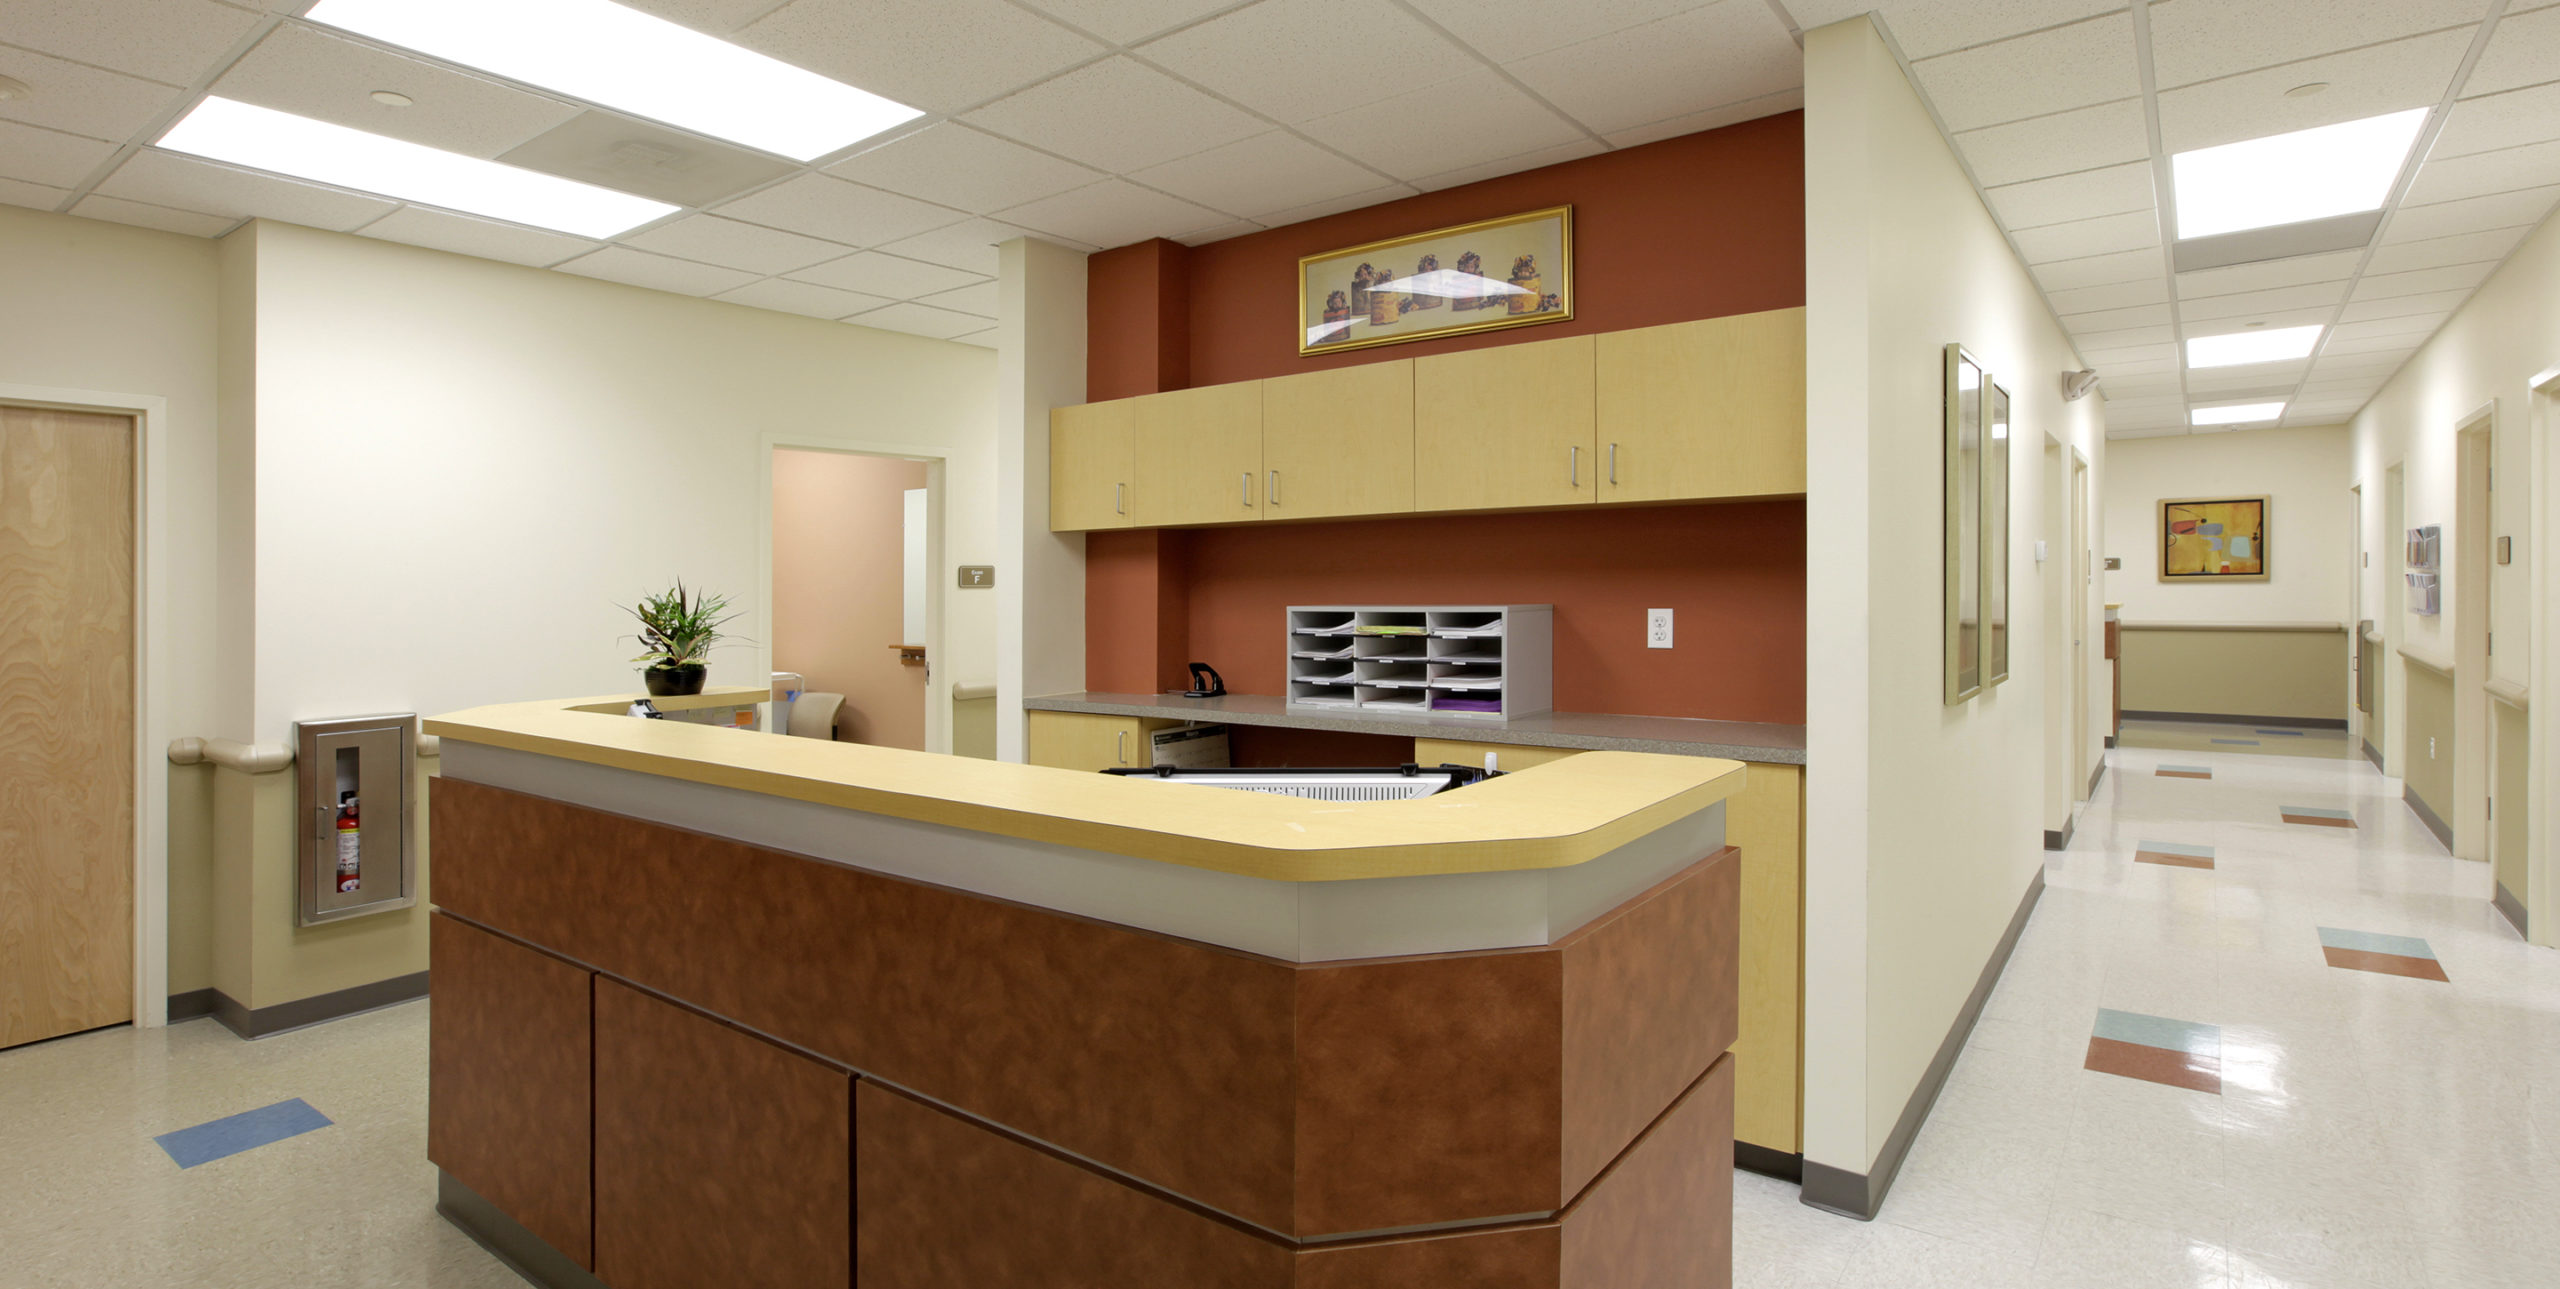 Receptionist desk at Stony Brook University Associates in Obstetrics and Gynecology at 4 Technology Drive, East Setauket